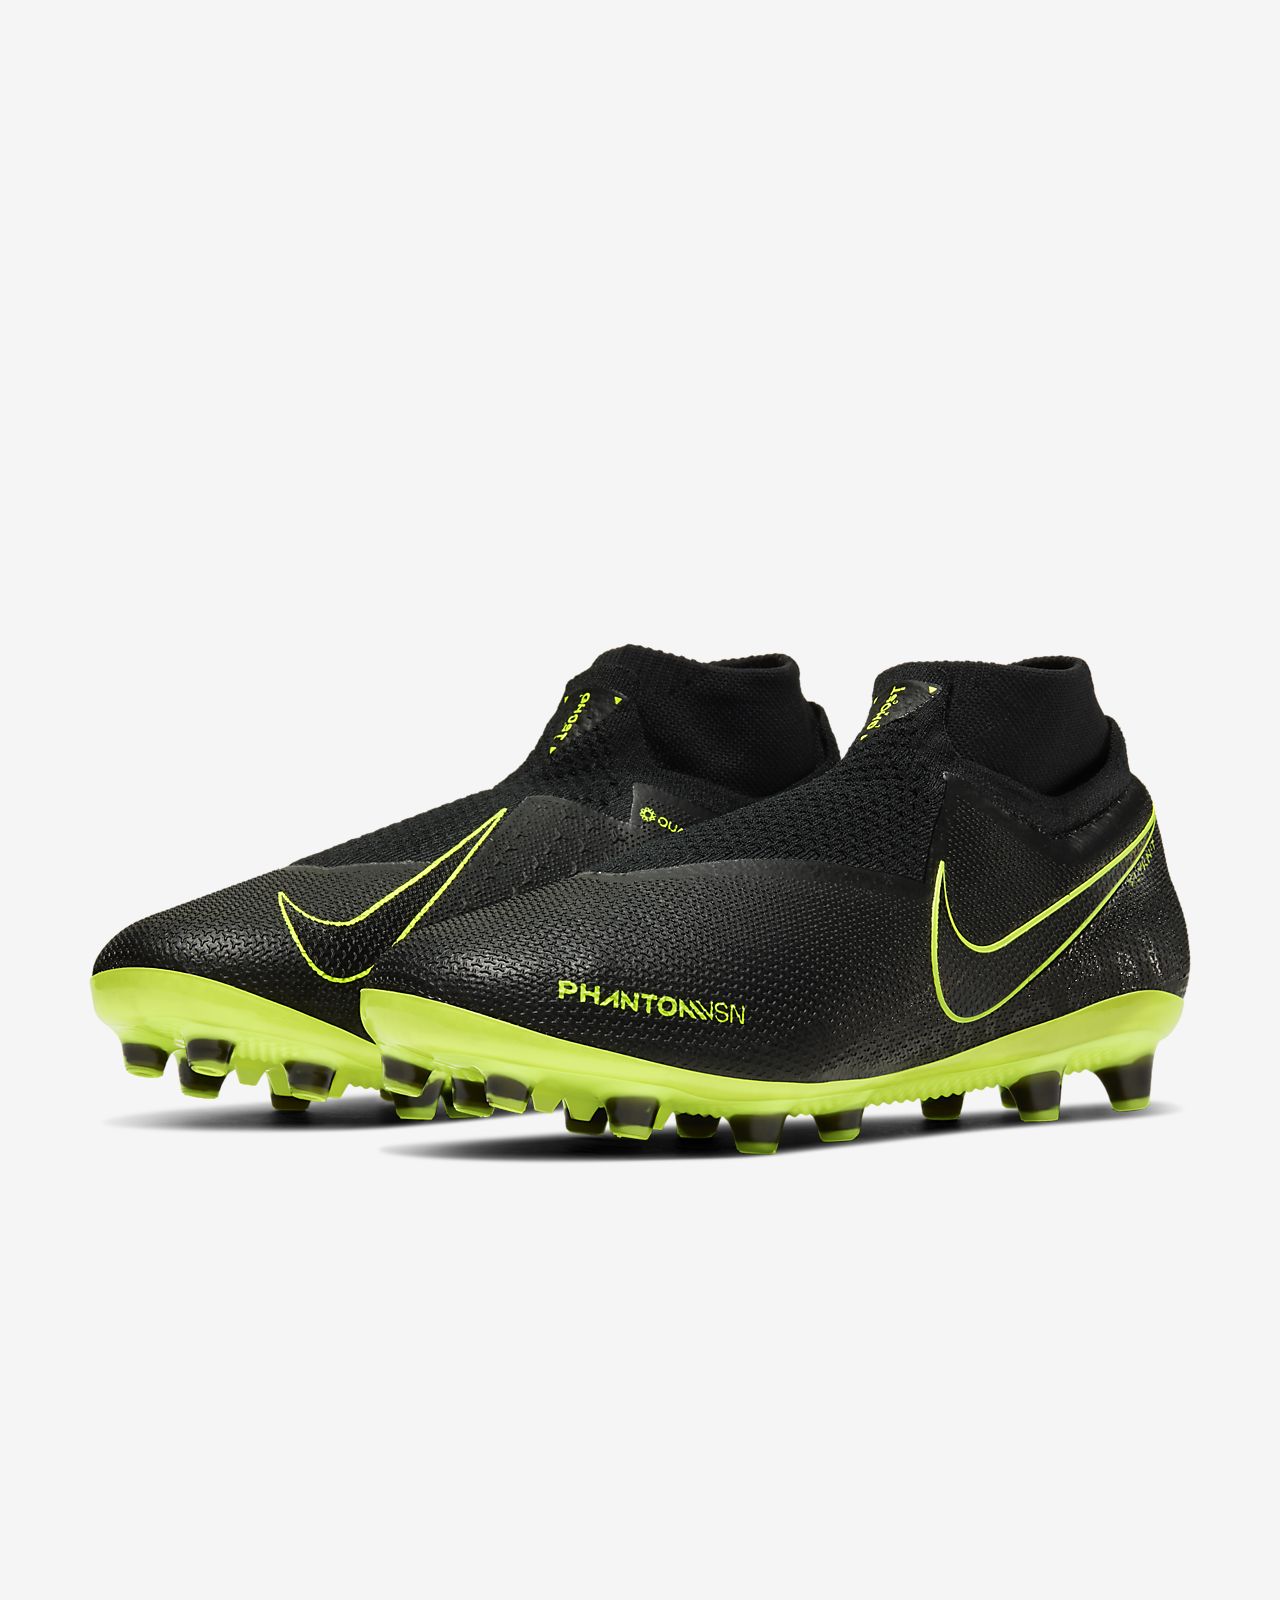 Nike Hypervenom Phantom III DF FG Soccer Cleats Light